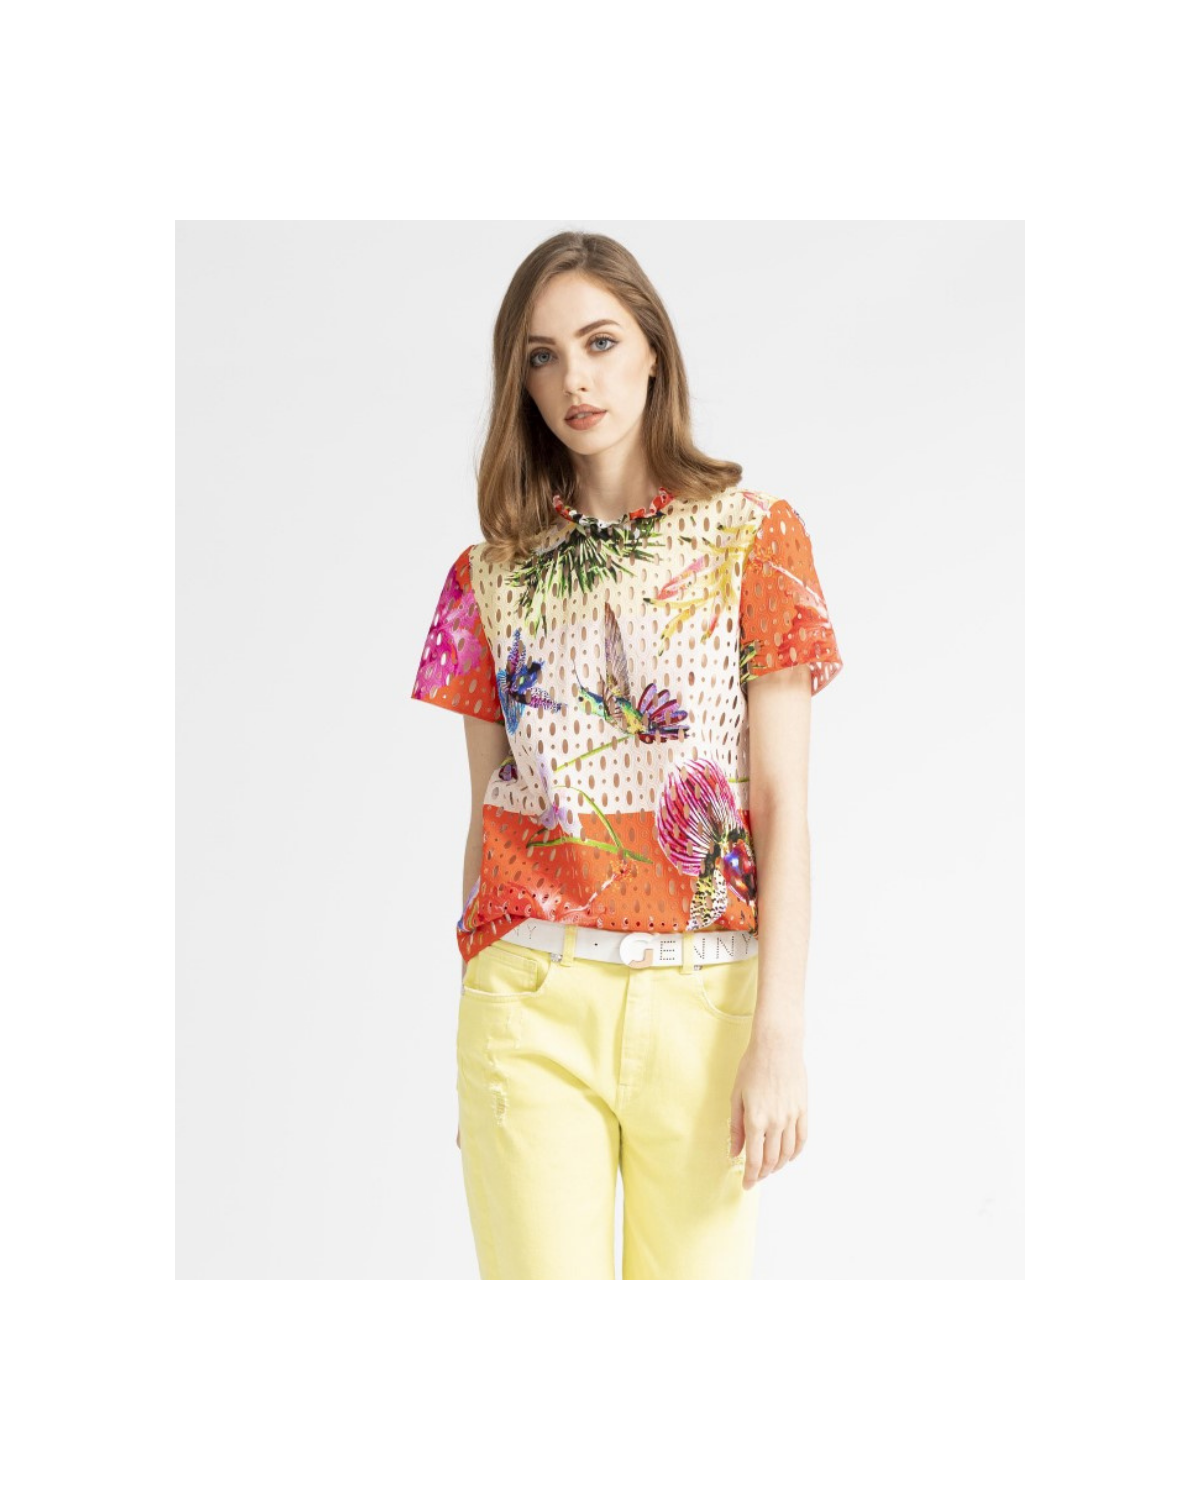 Floral print sangallo lace blouse | Temporary Flash Sale | Genny